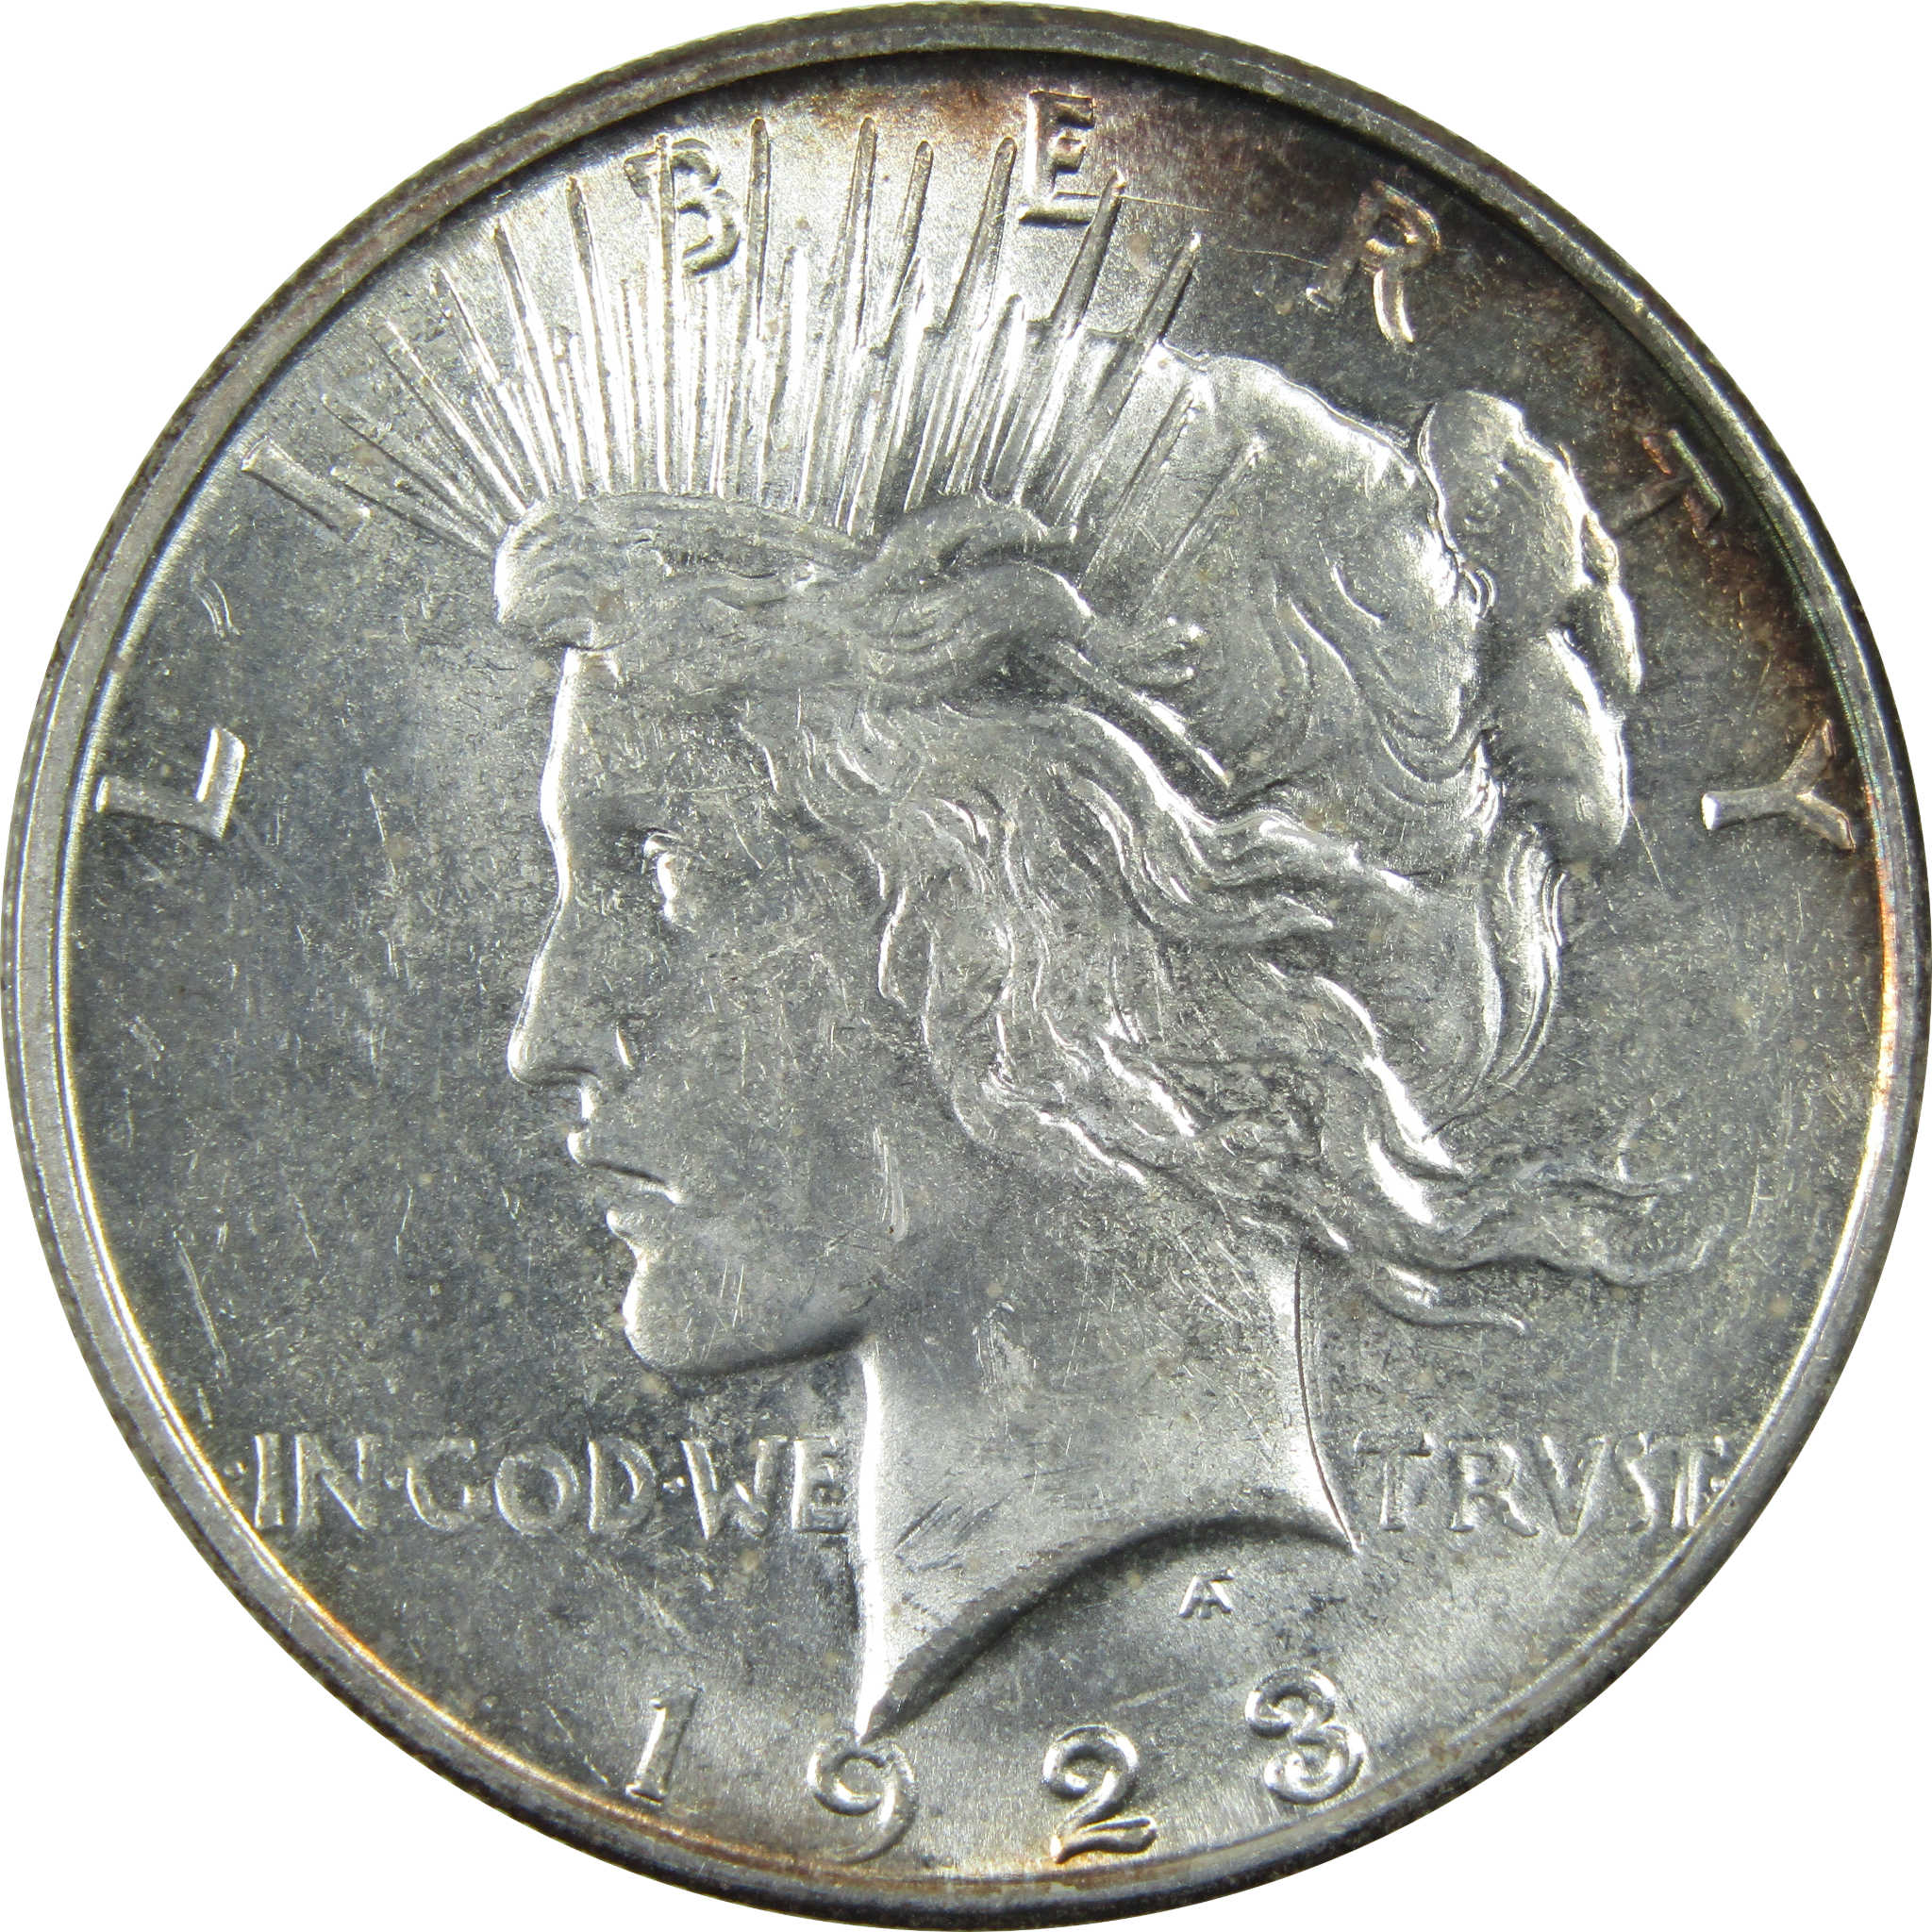 1923 D Peace Dollar Borderline Uncirculated Silver $1 Coin SKU:I13379